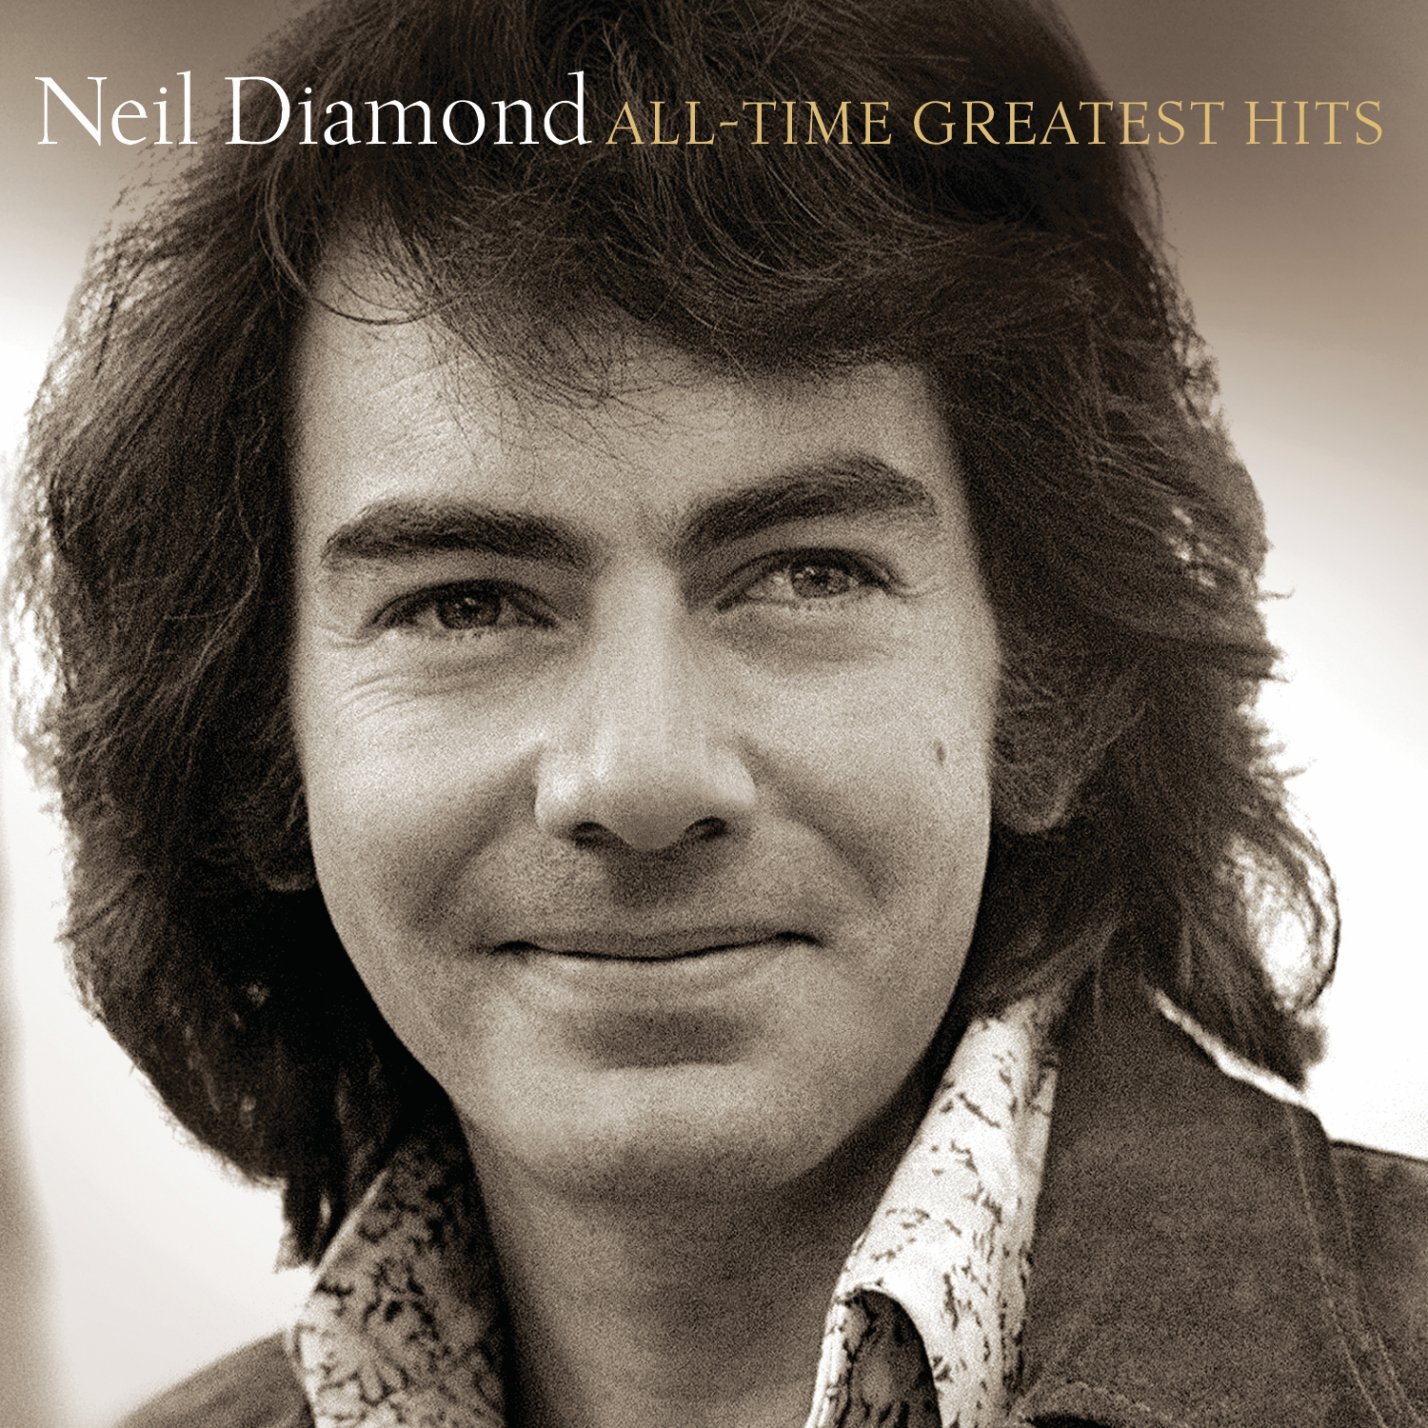 Neil Diamond - All-Time Greatest Hits (Music CD)